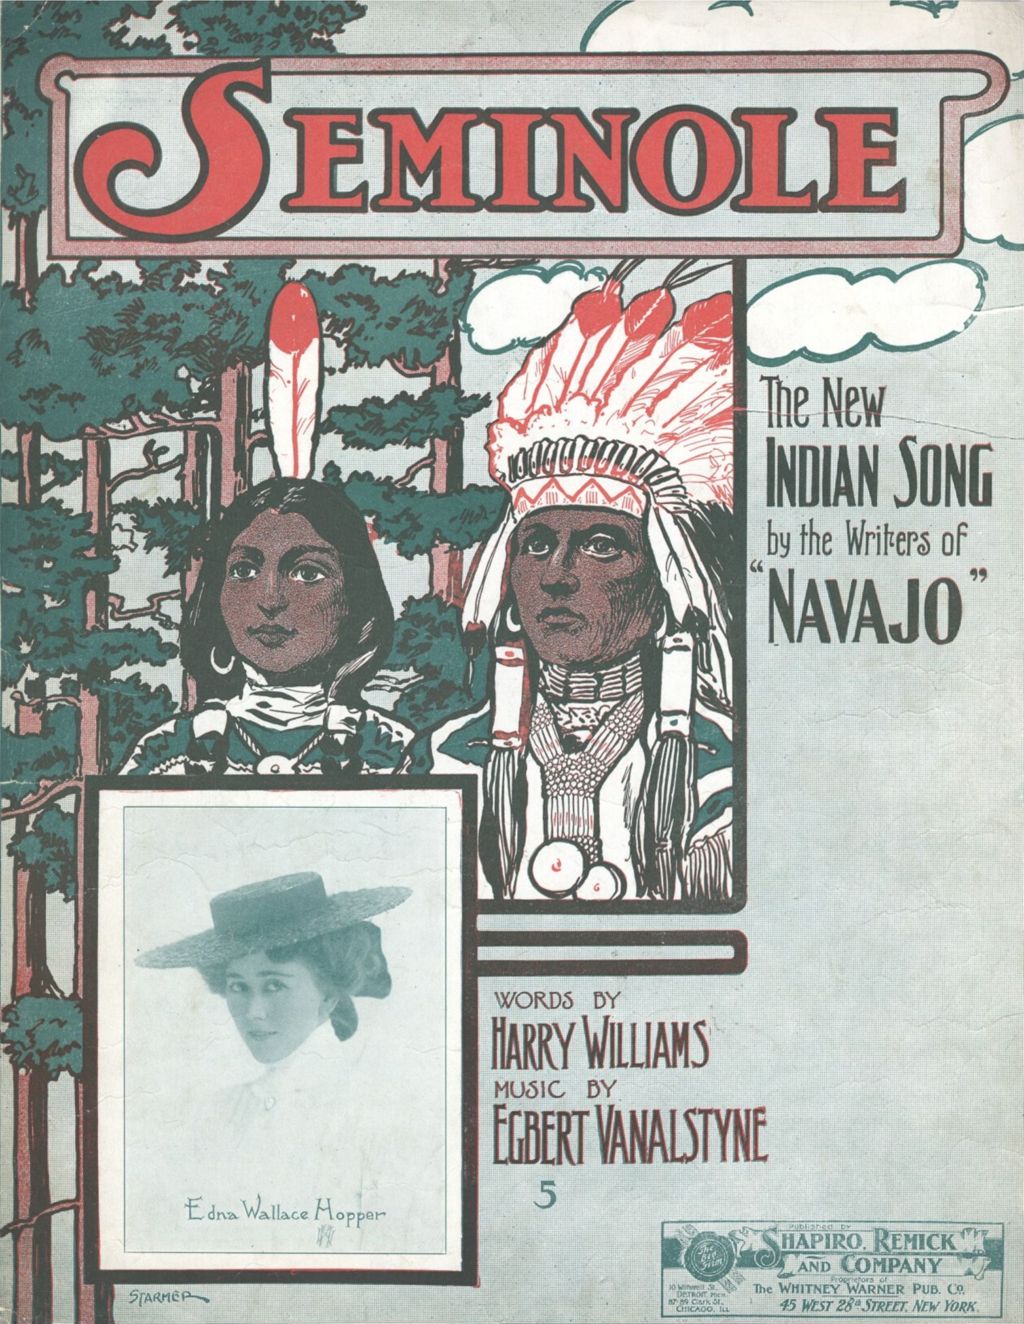 Miniature of Seminole